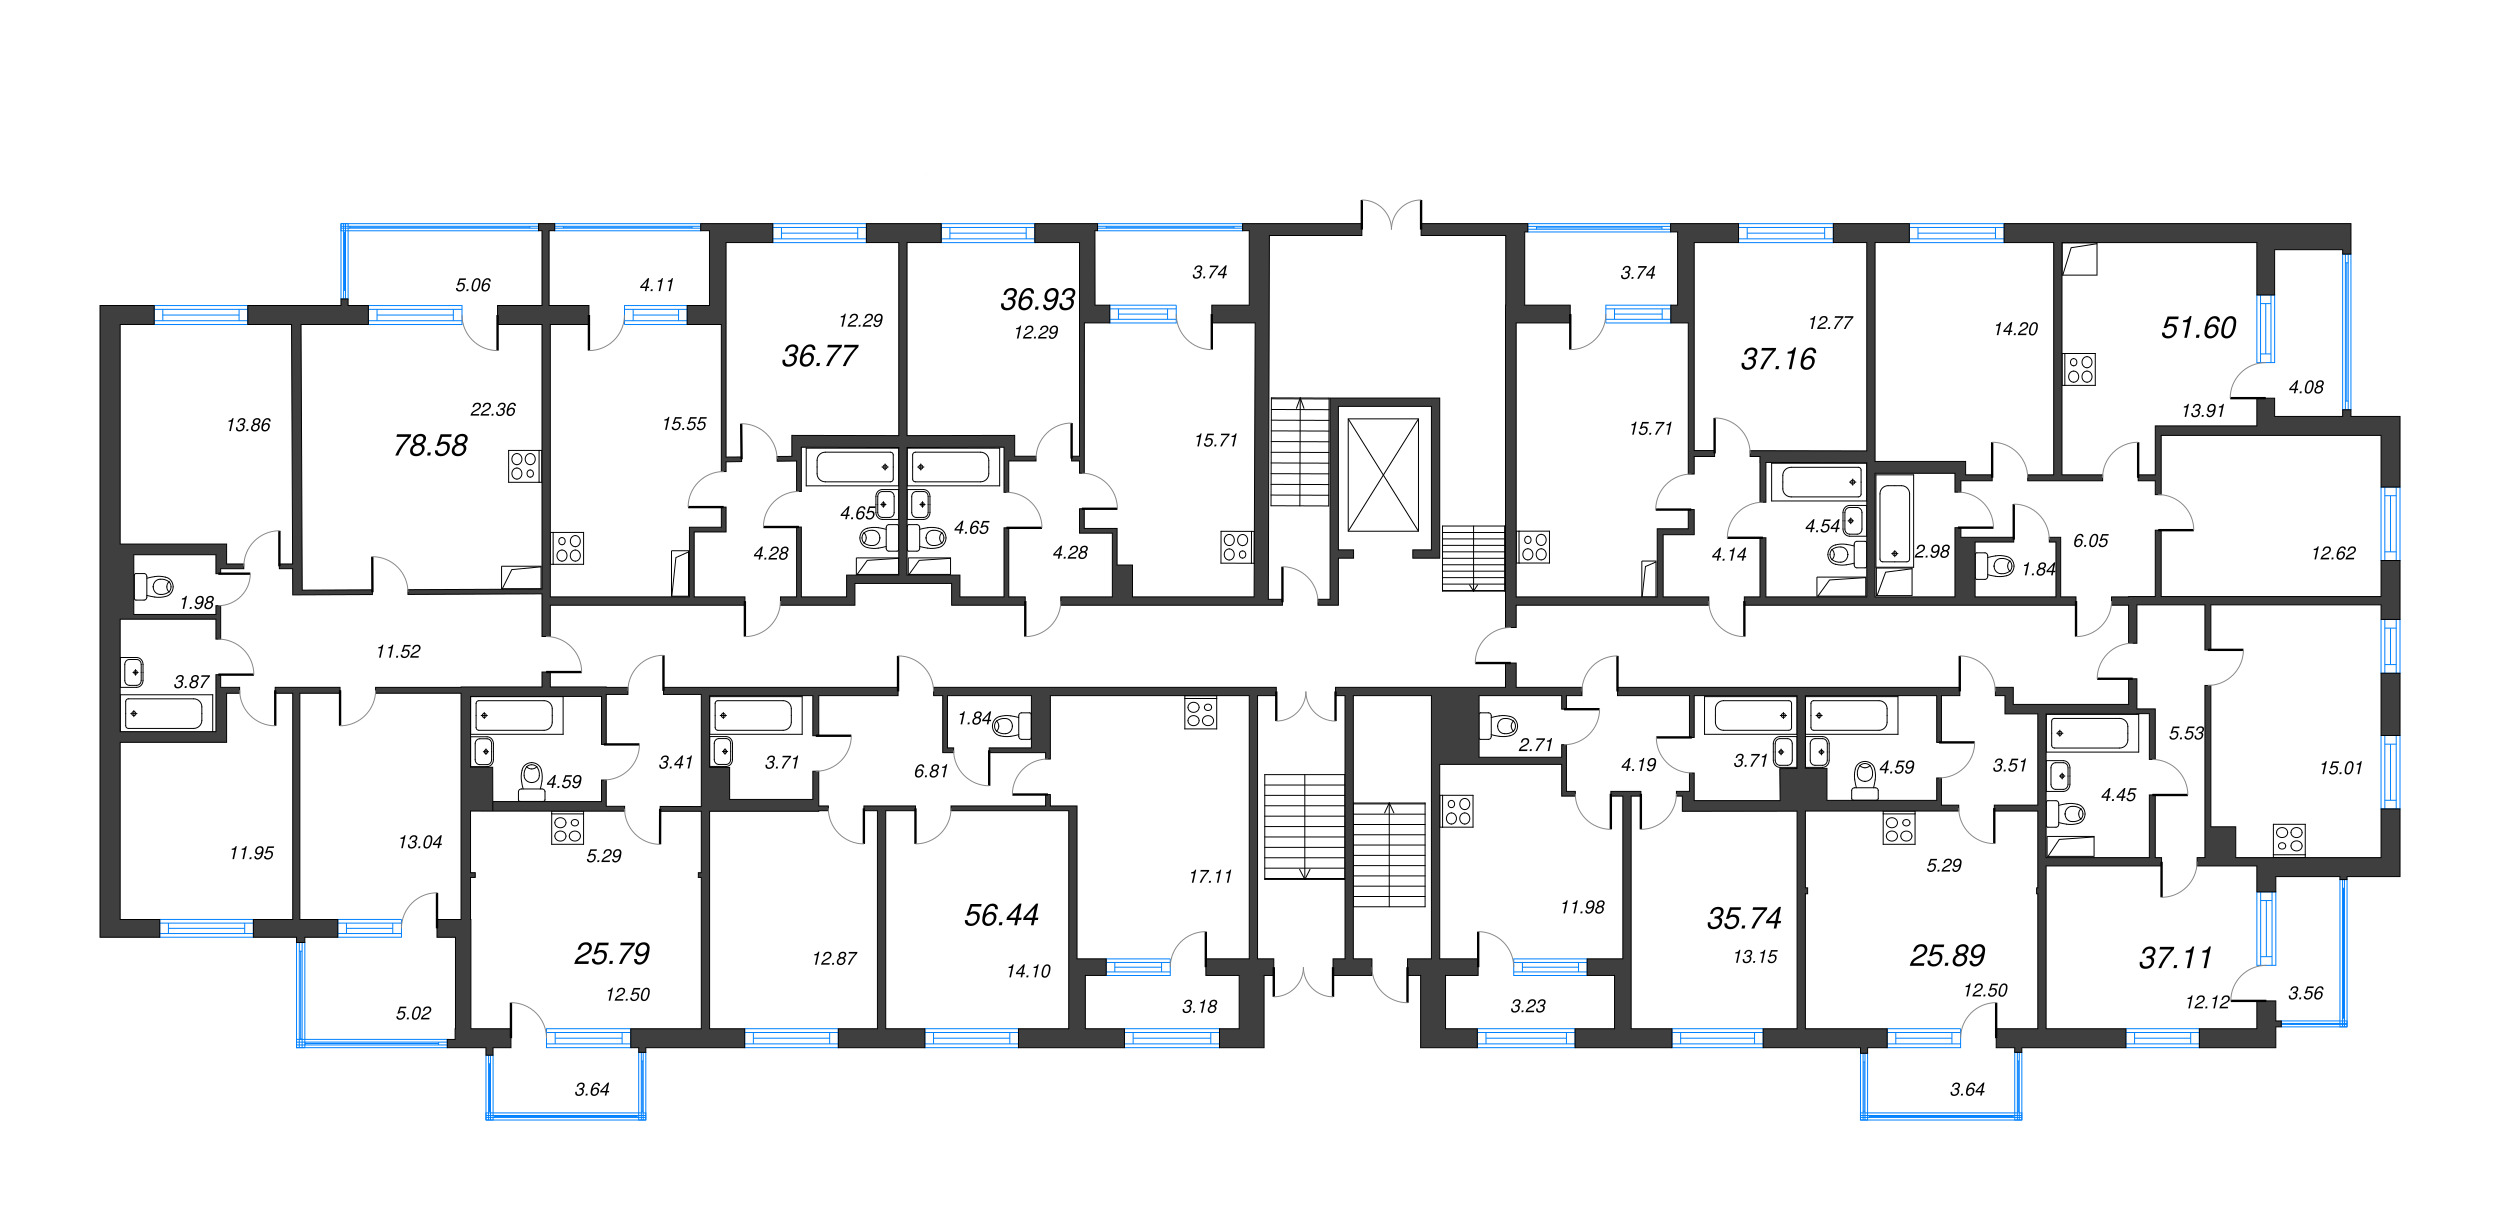 2-комнатная (Евро) квартира, 37.16 м² - планировка этажа